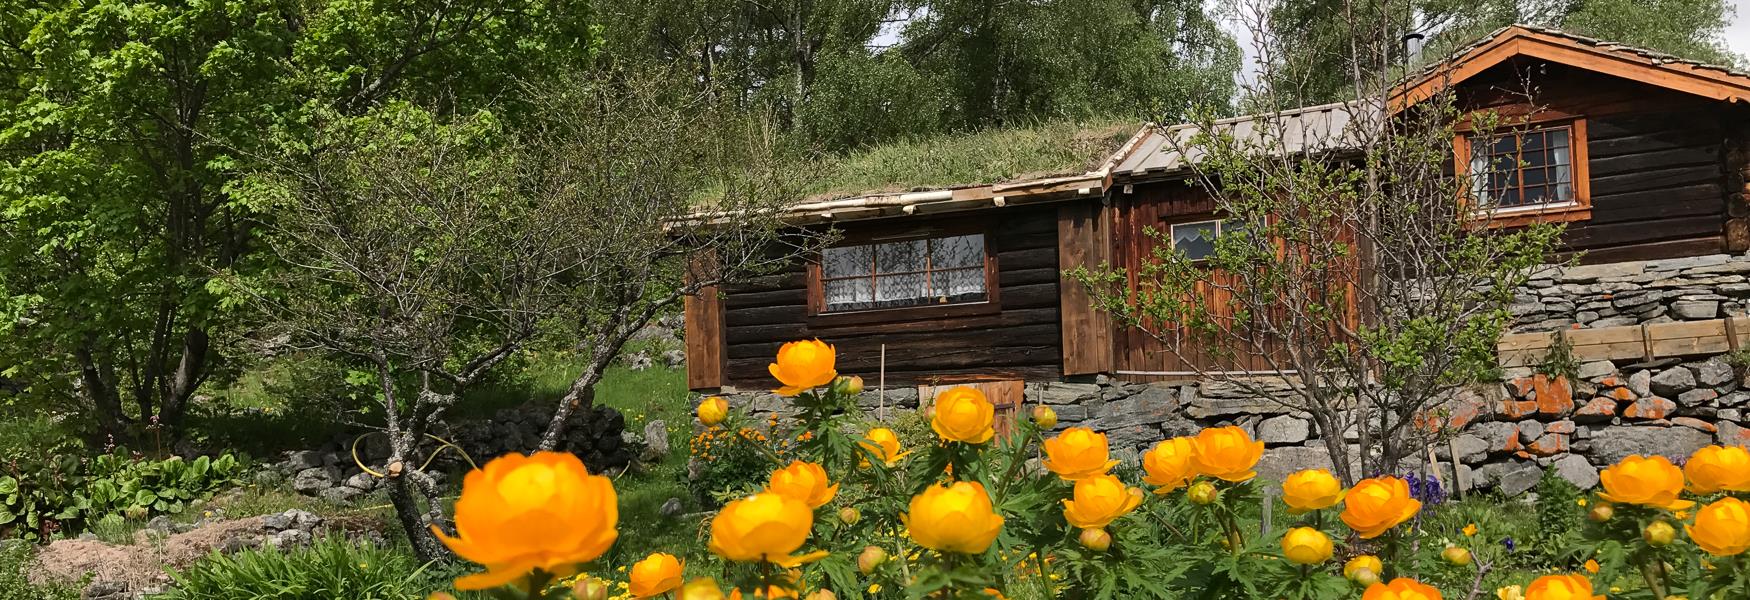 Haukdalen kunstnarheim, gardsturisme, gardsbruk, blomster, tømmerhus, hytte, tømmerhytte, historisk overnatting, Haukdalen kunstnarformidling